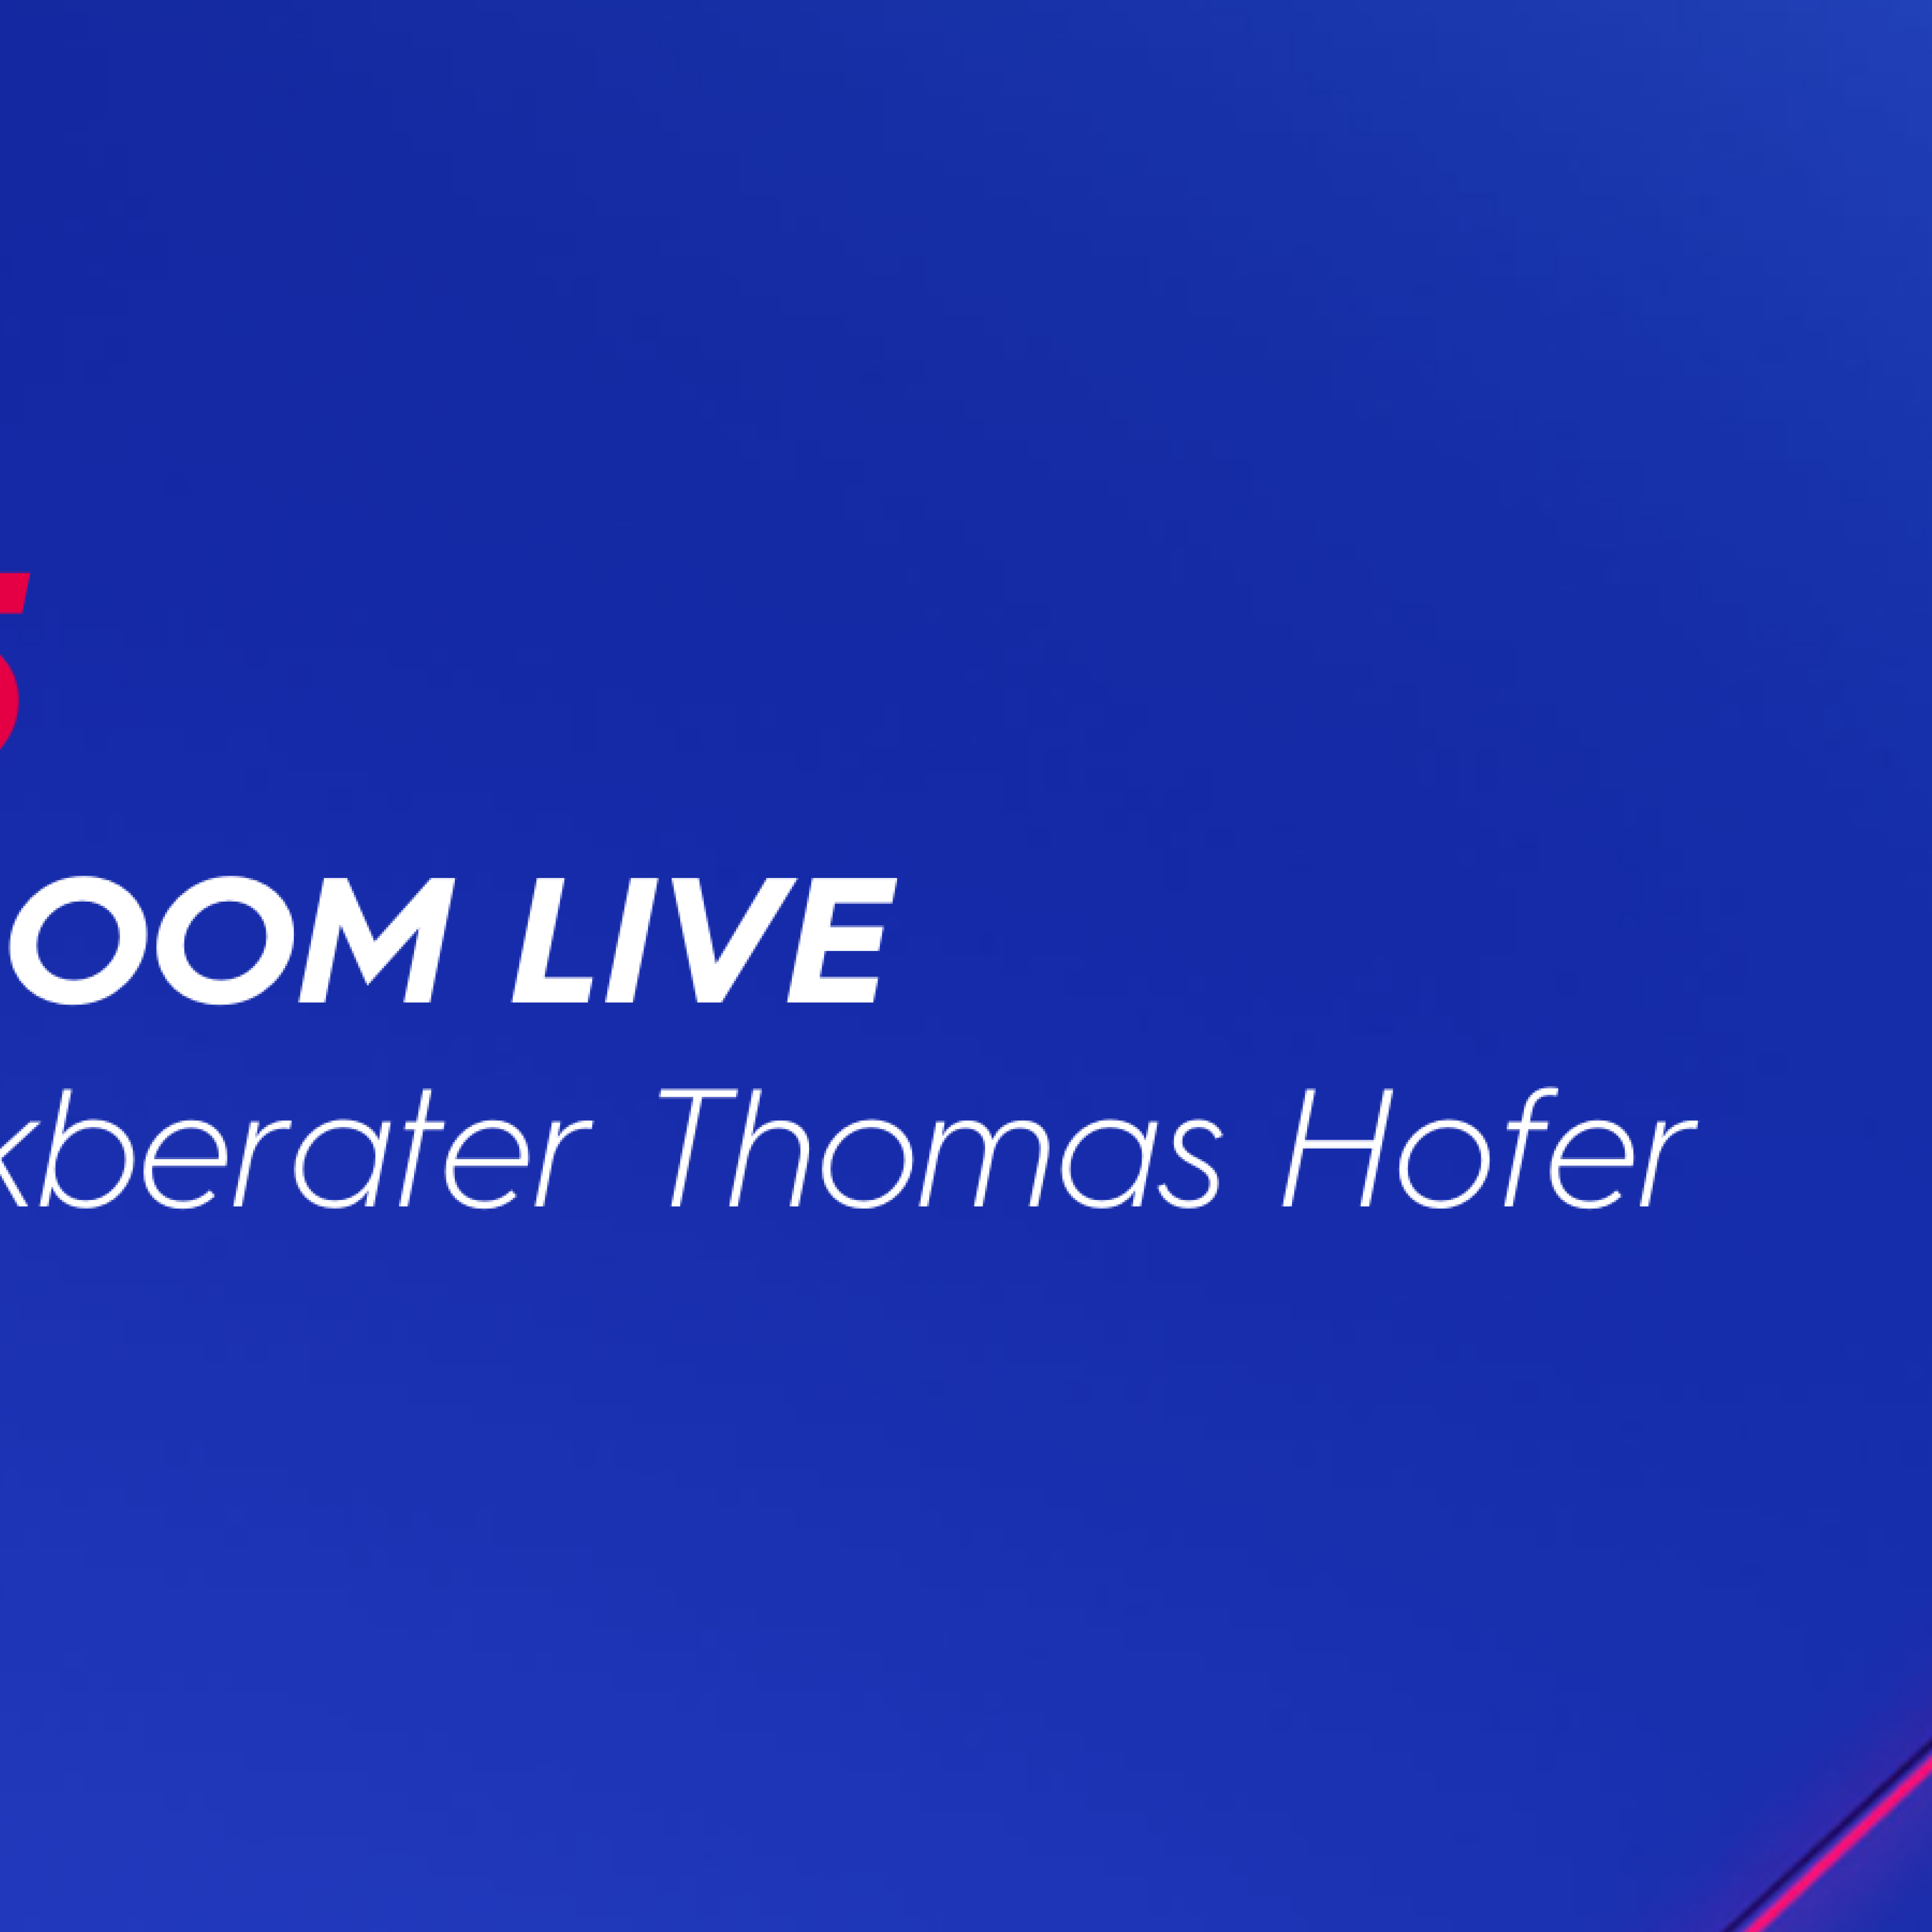 Newsroom LIVE 17.05.2022 Thomas Hofer